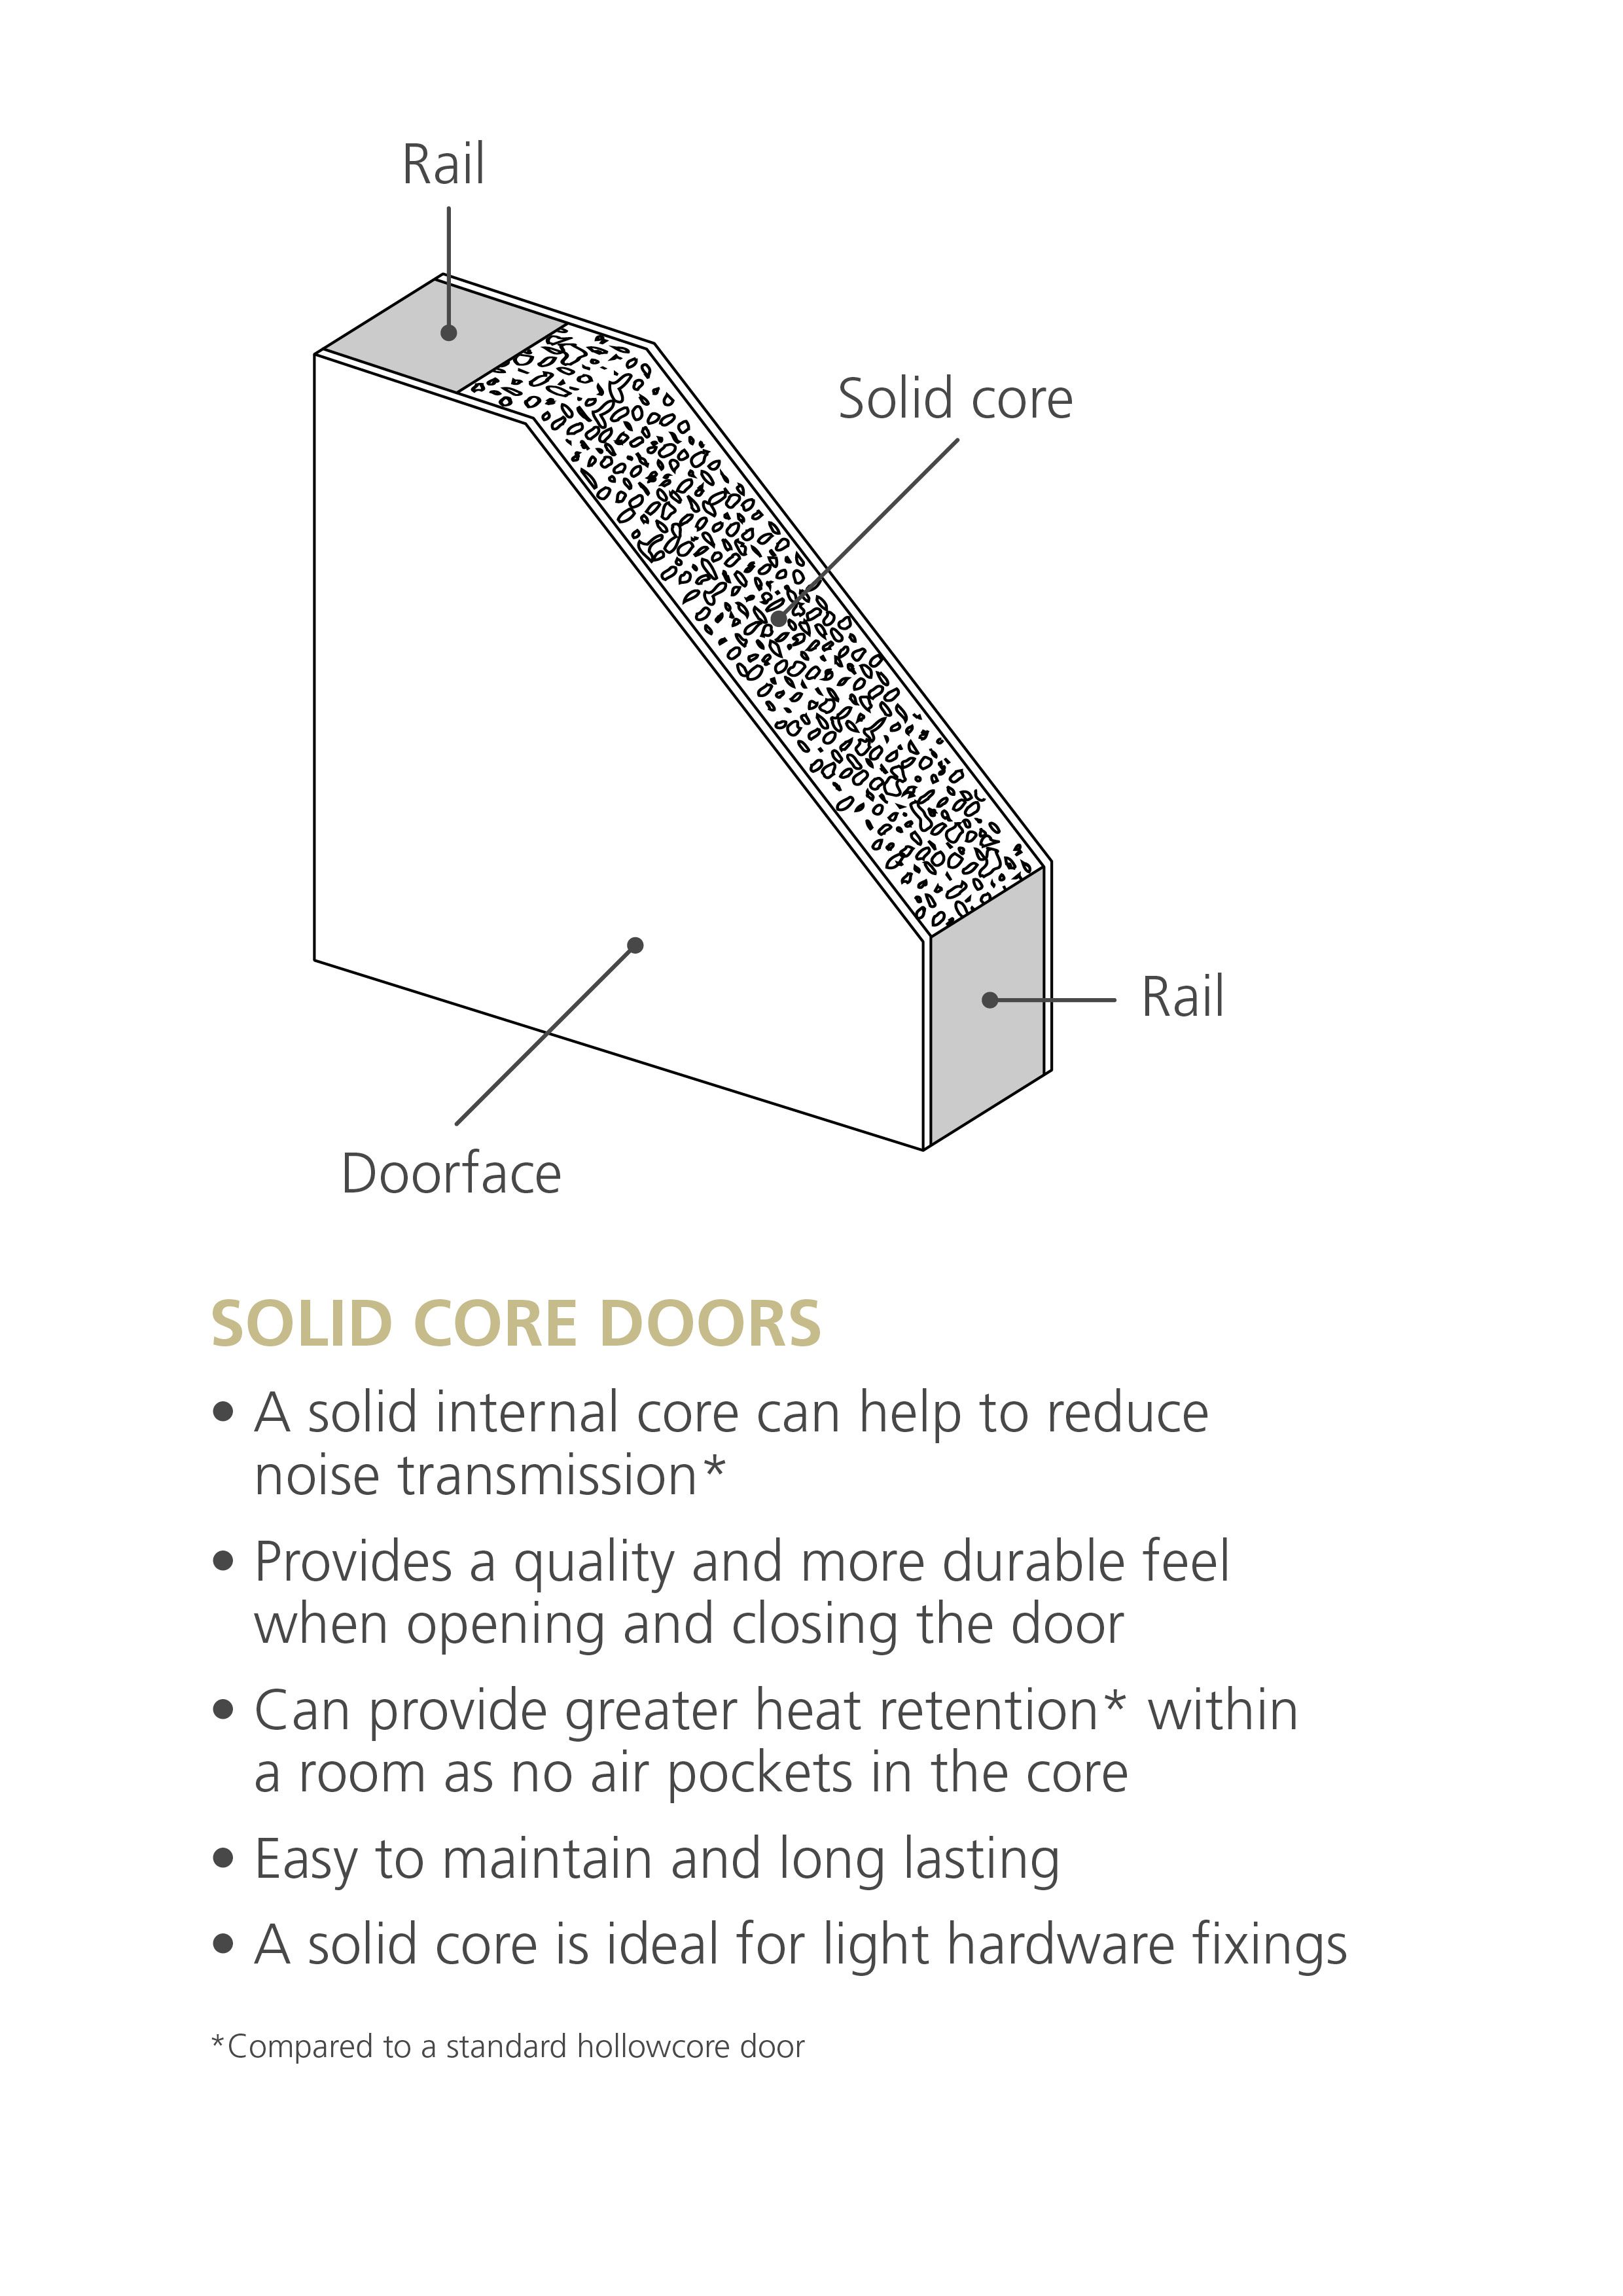 Jeld-Wen 4 panel Solid core Unglazed Contemporary White Internal Door, (H)1981mm (W)838mm (T)35mm